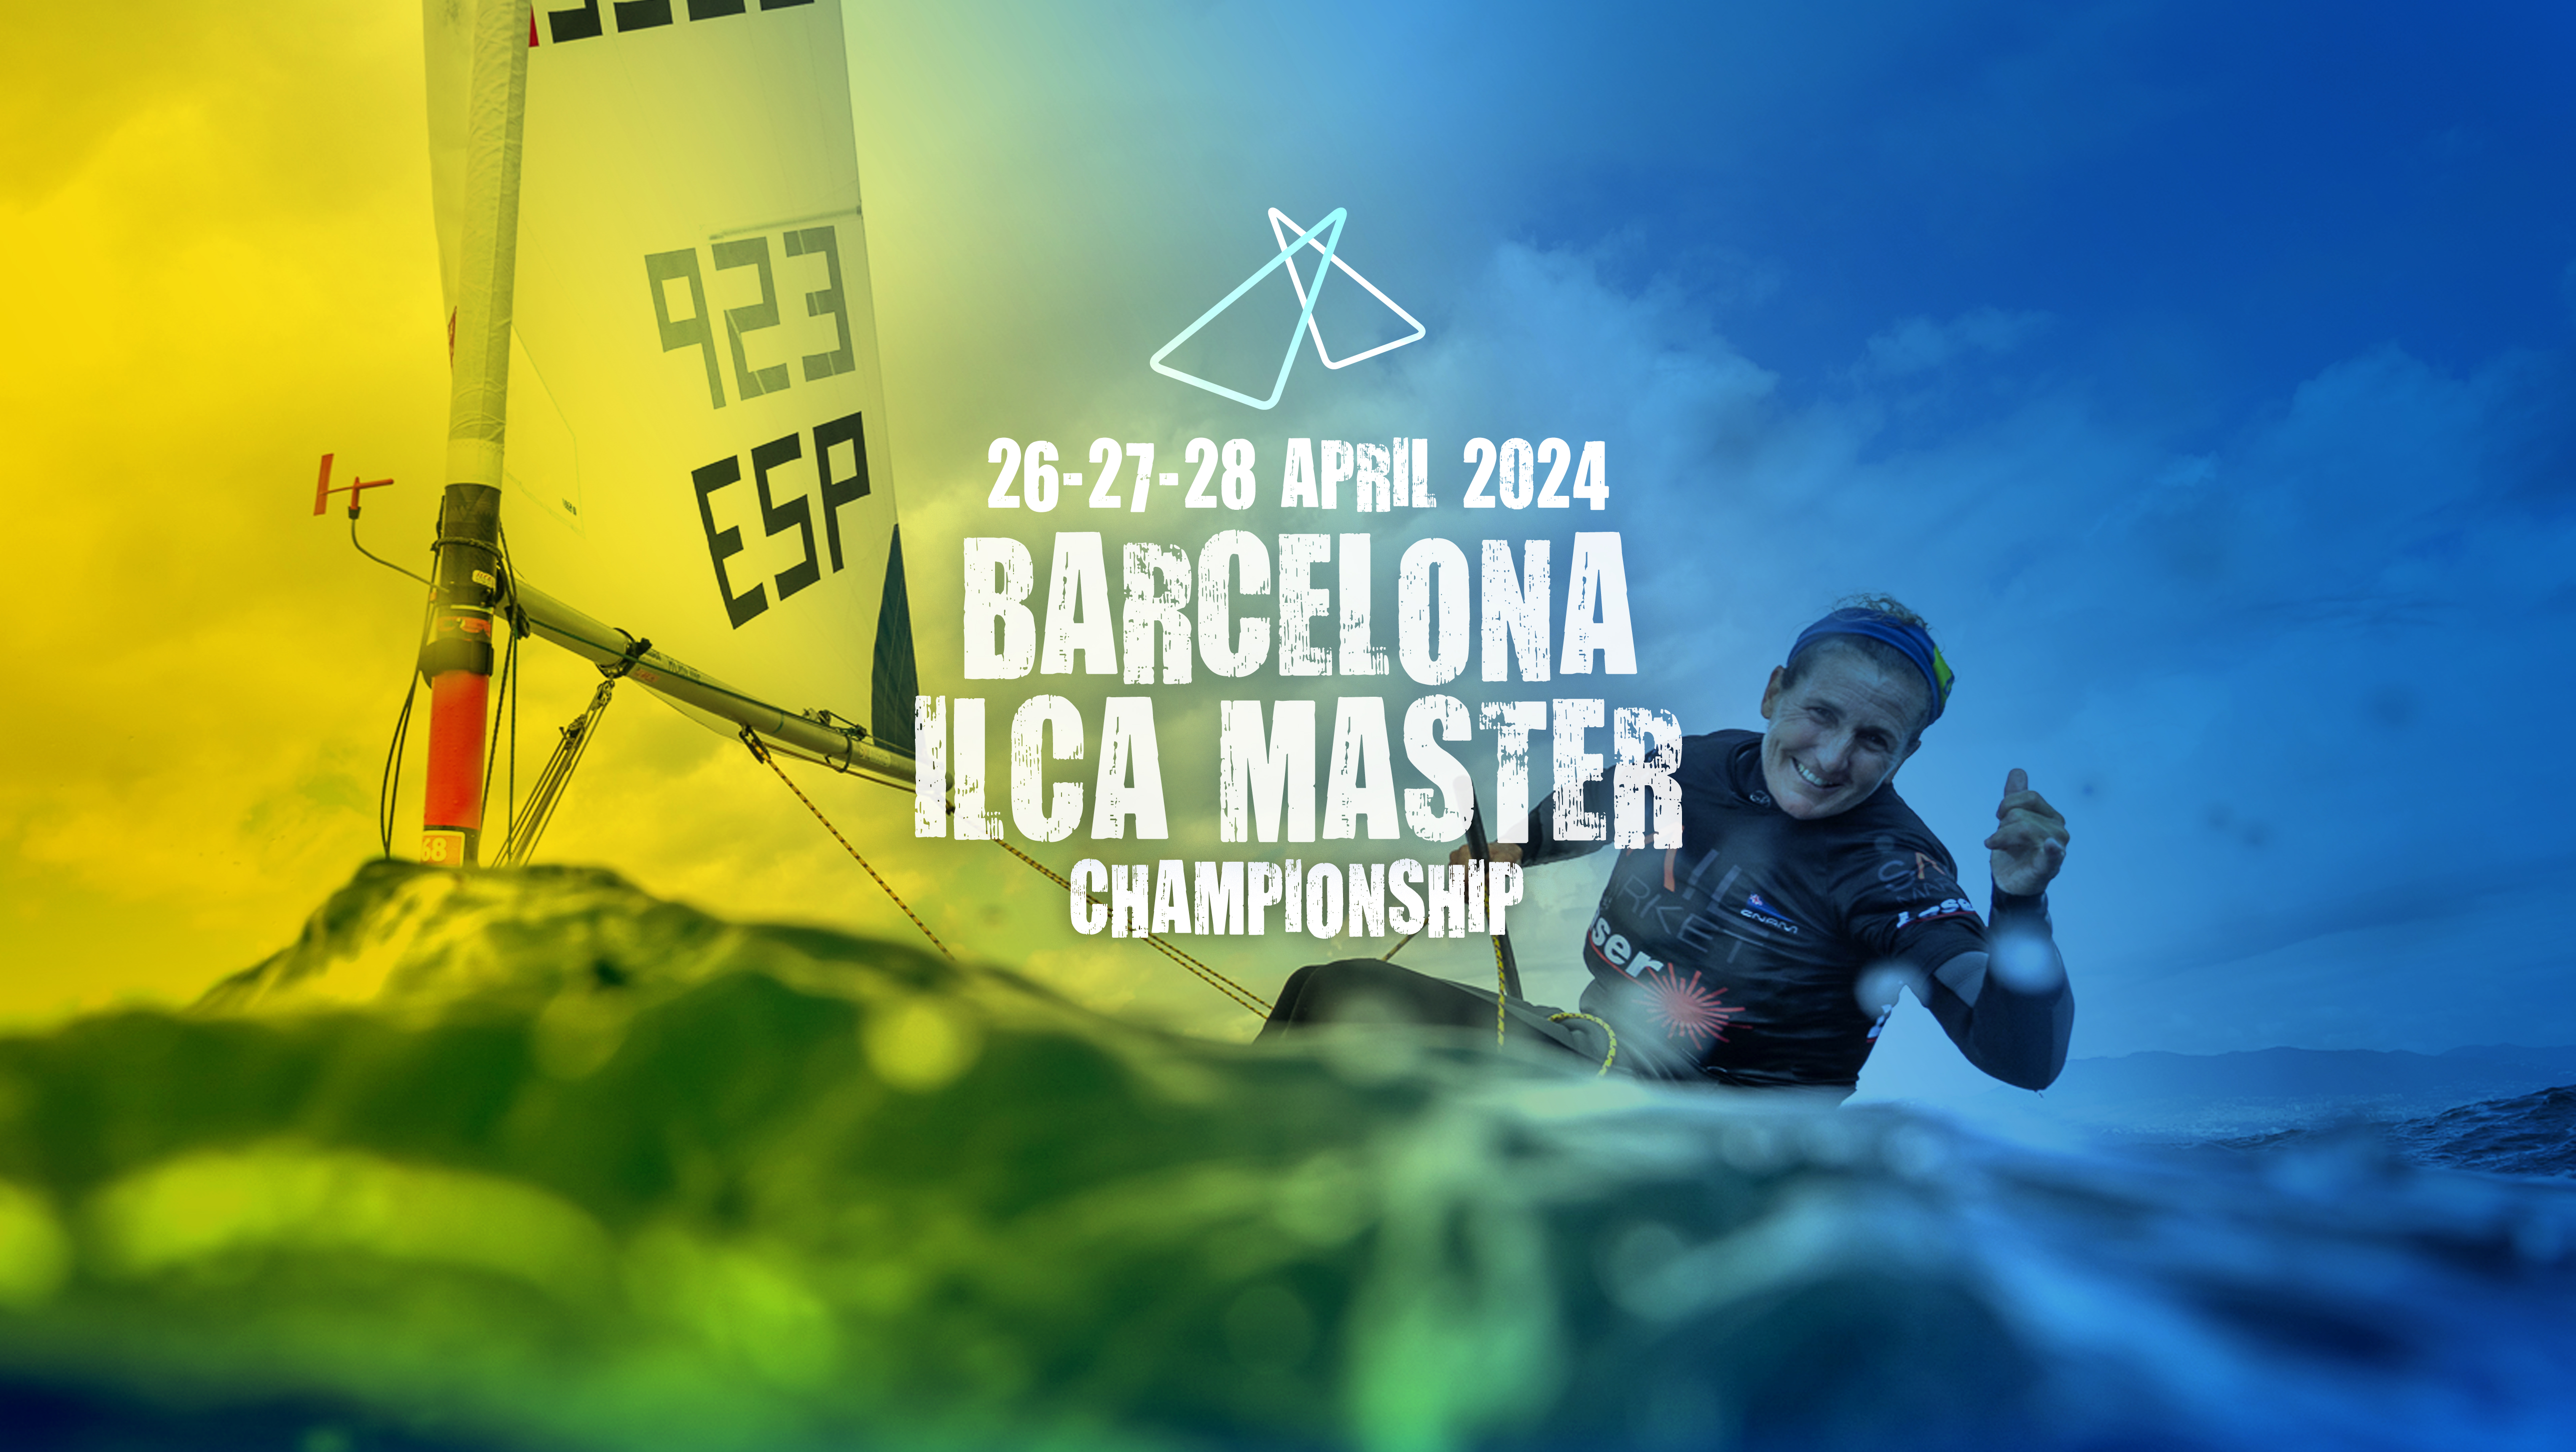 Barcelona Ilca Master Championship 2024